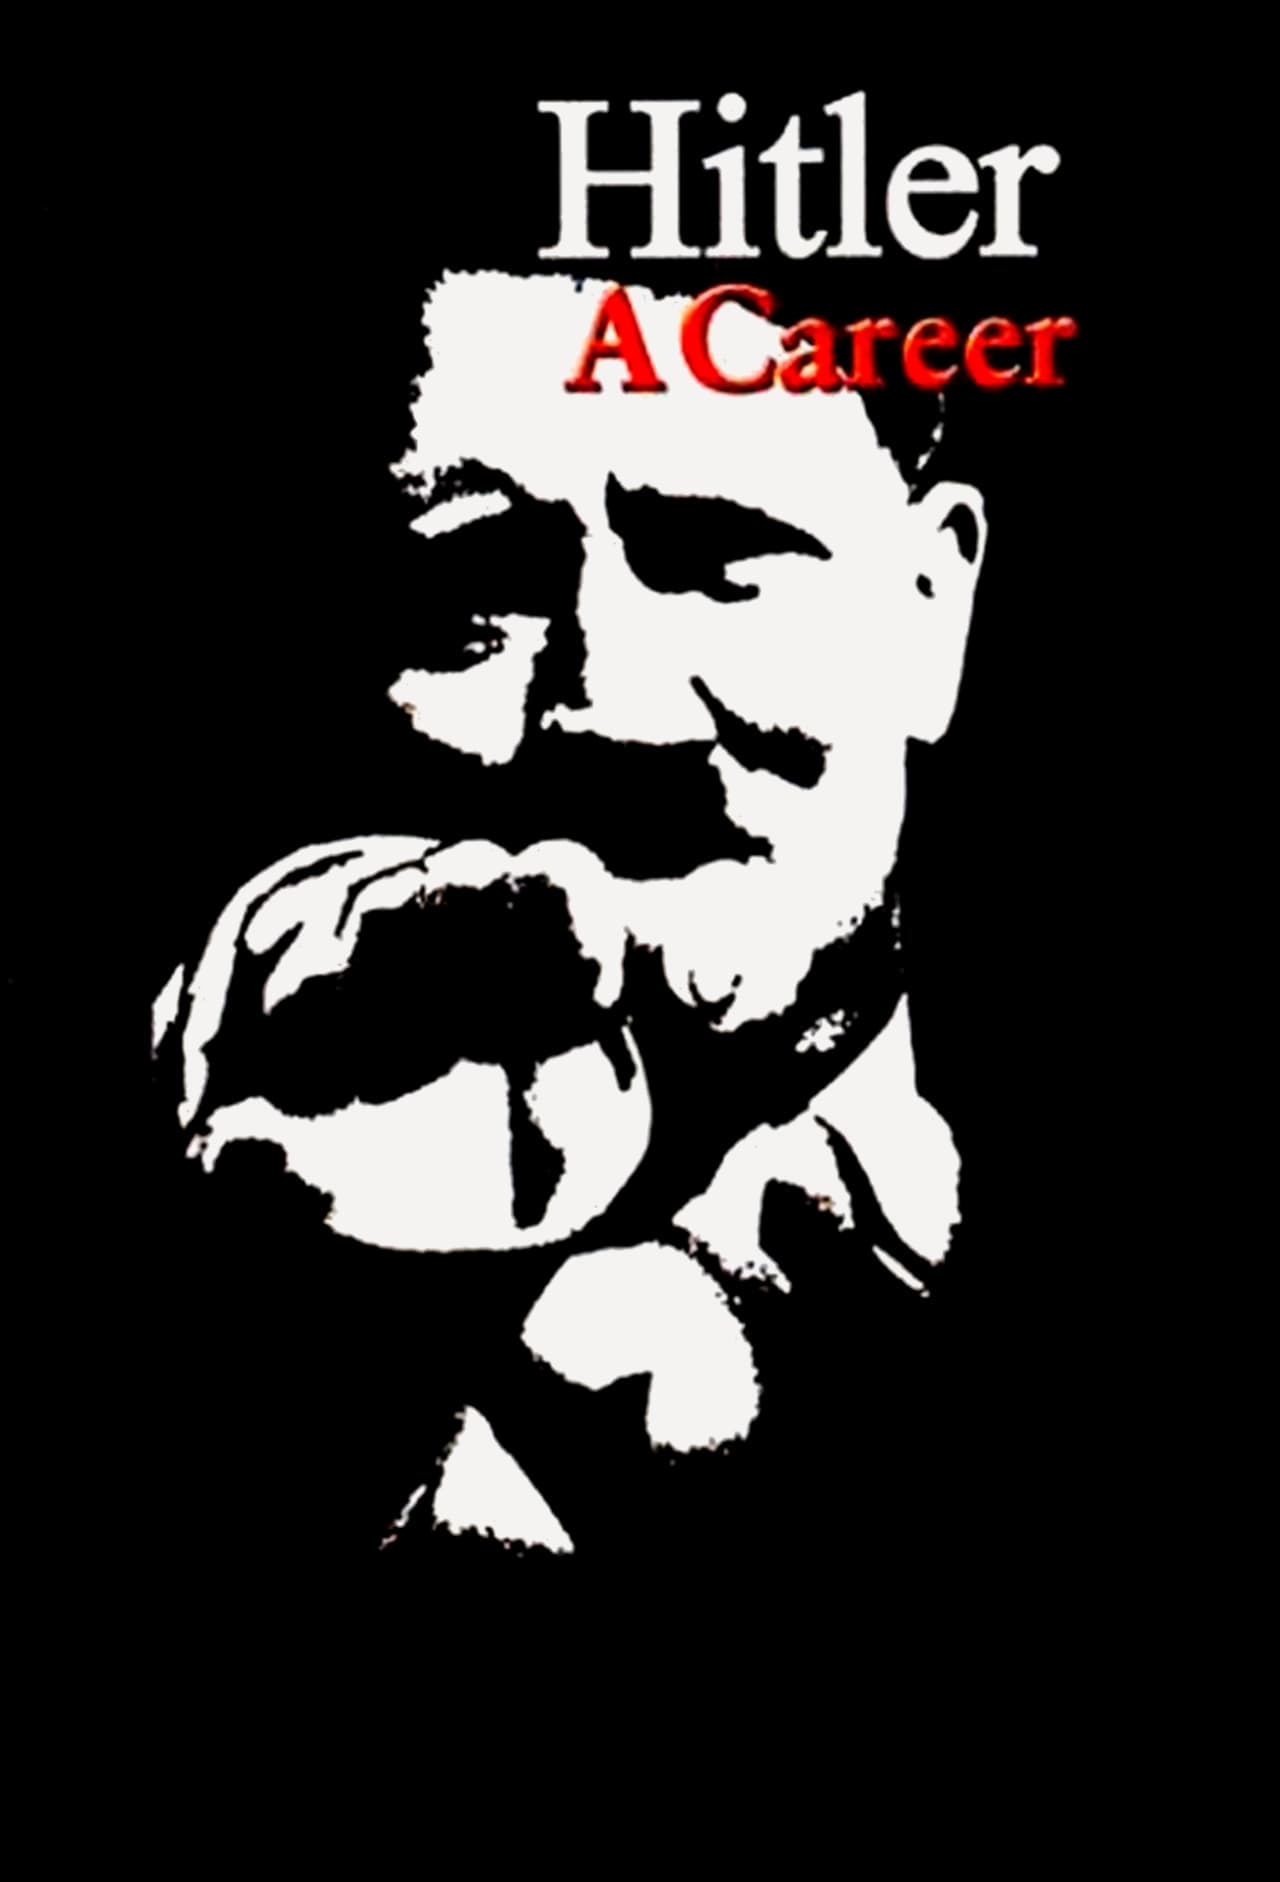 Caratula de Hitler - Eine Karriere (Hitler, una biografía) 